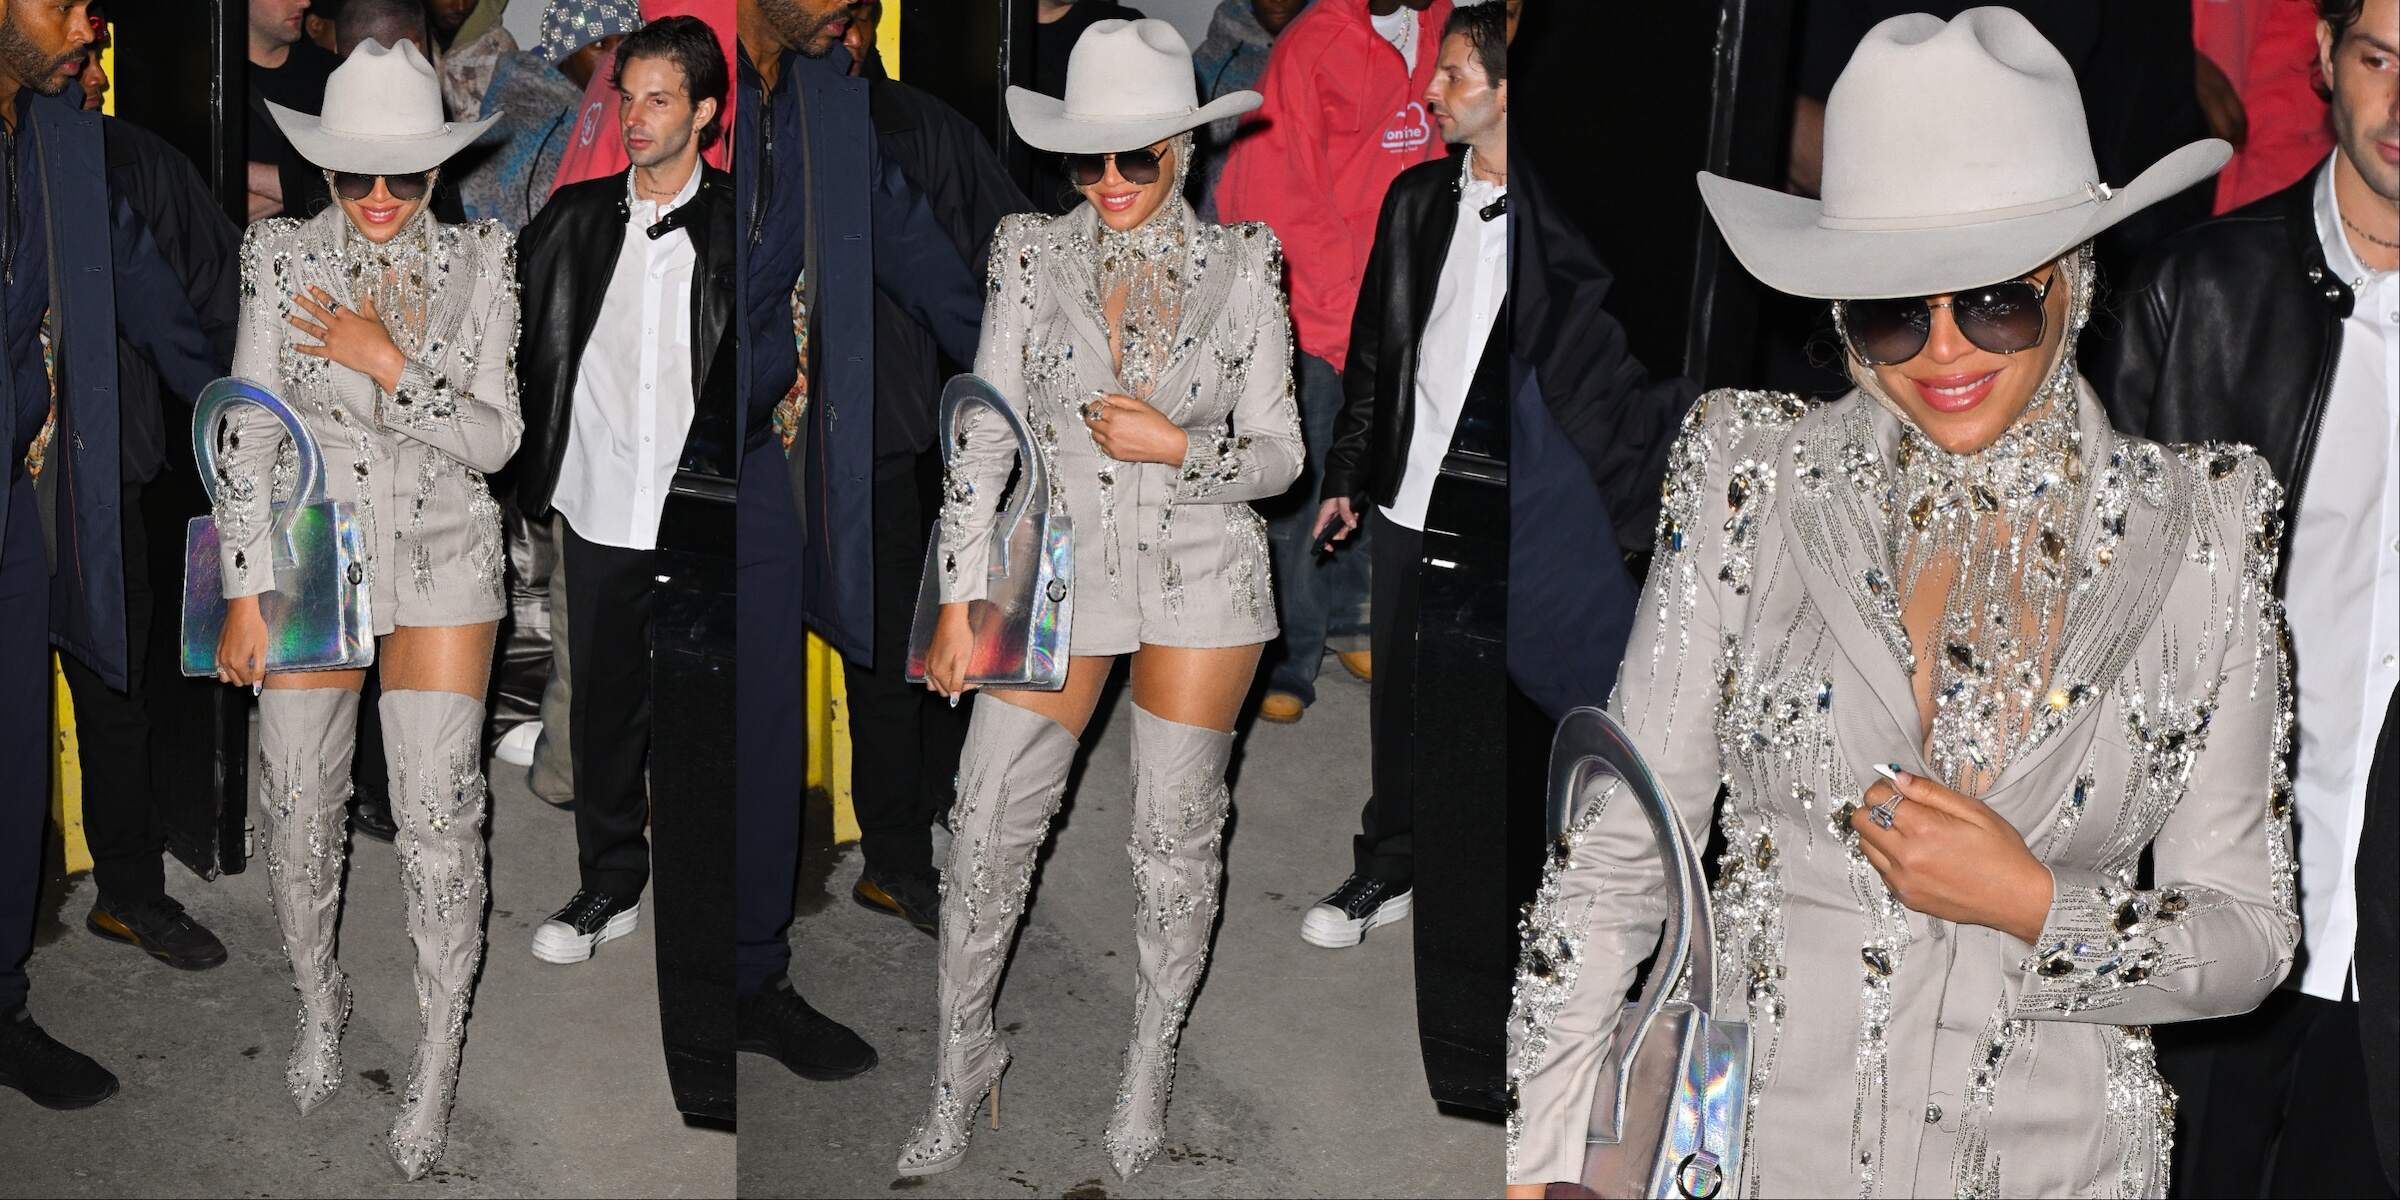 Singer Beyoncé leaves the Luar fashion show at 154 Scott in Brooklyn wearing silver cowboy gear